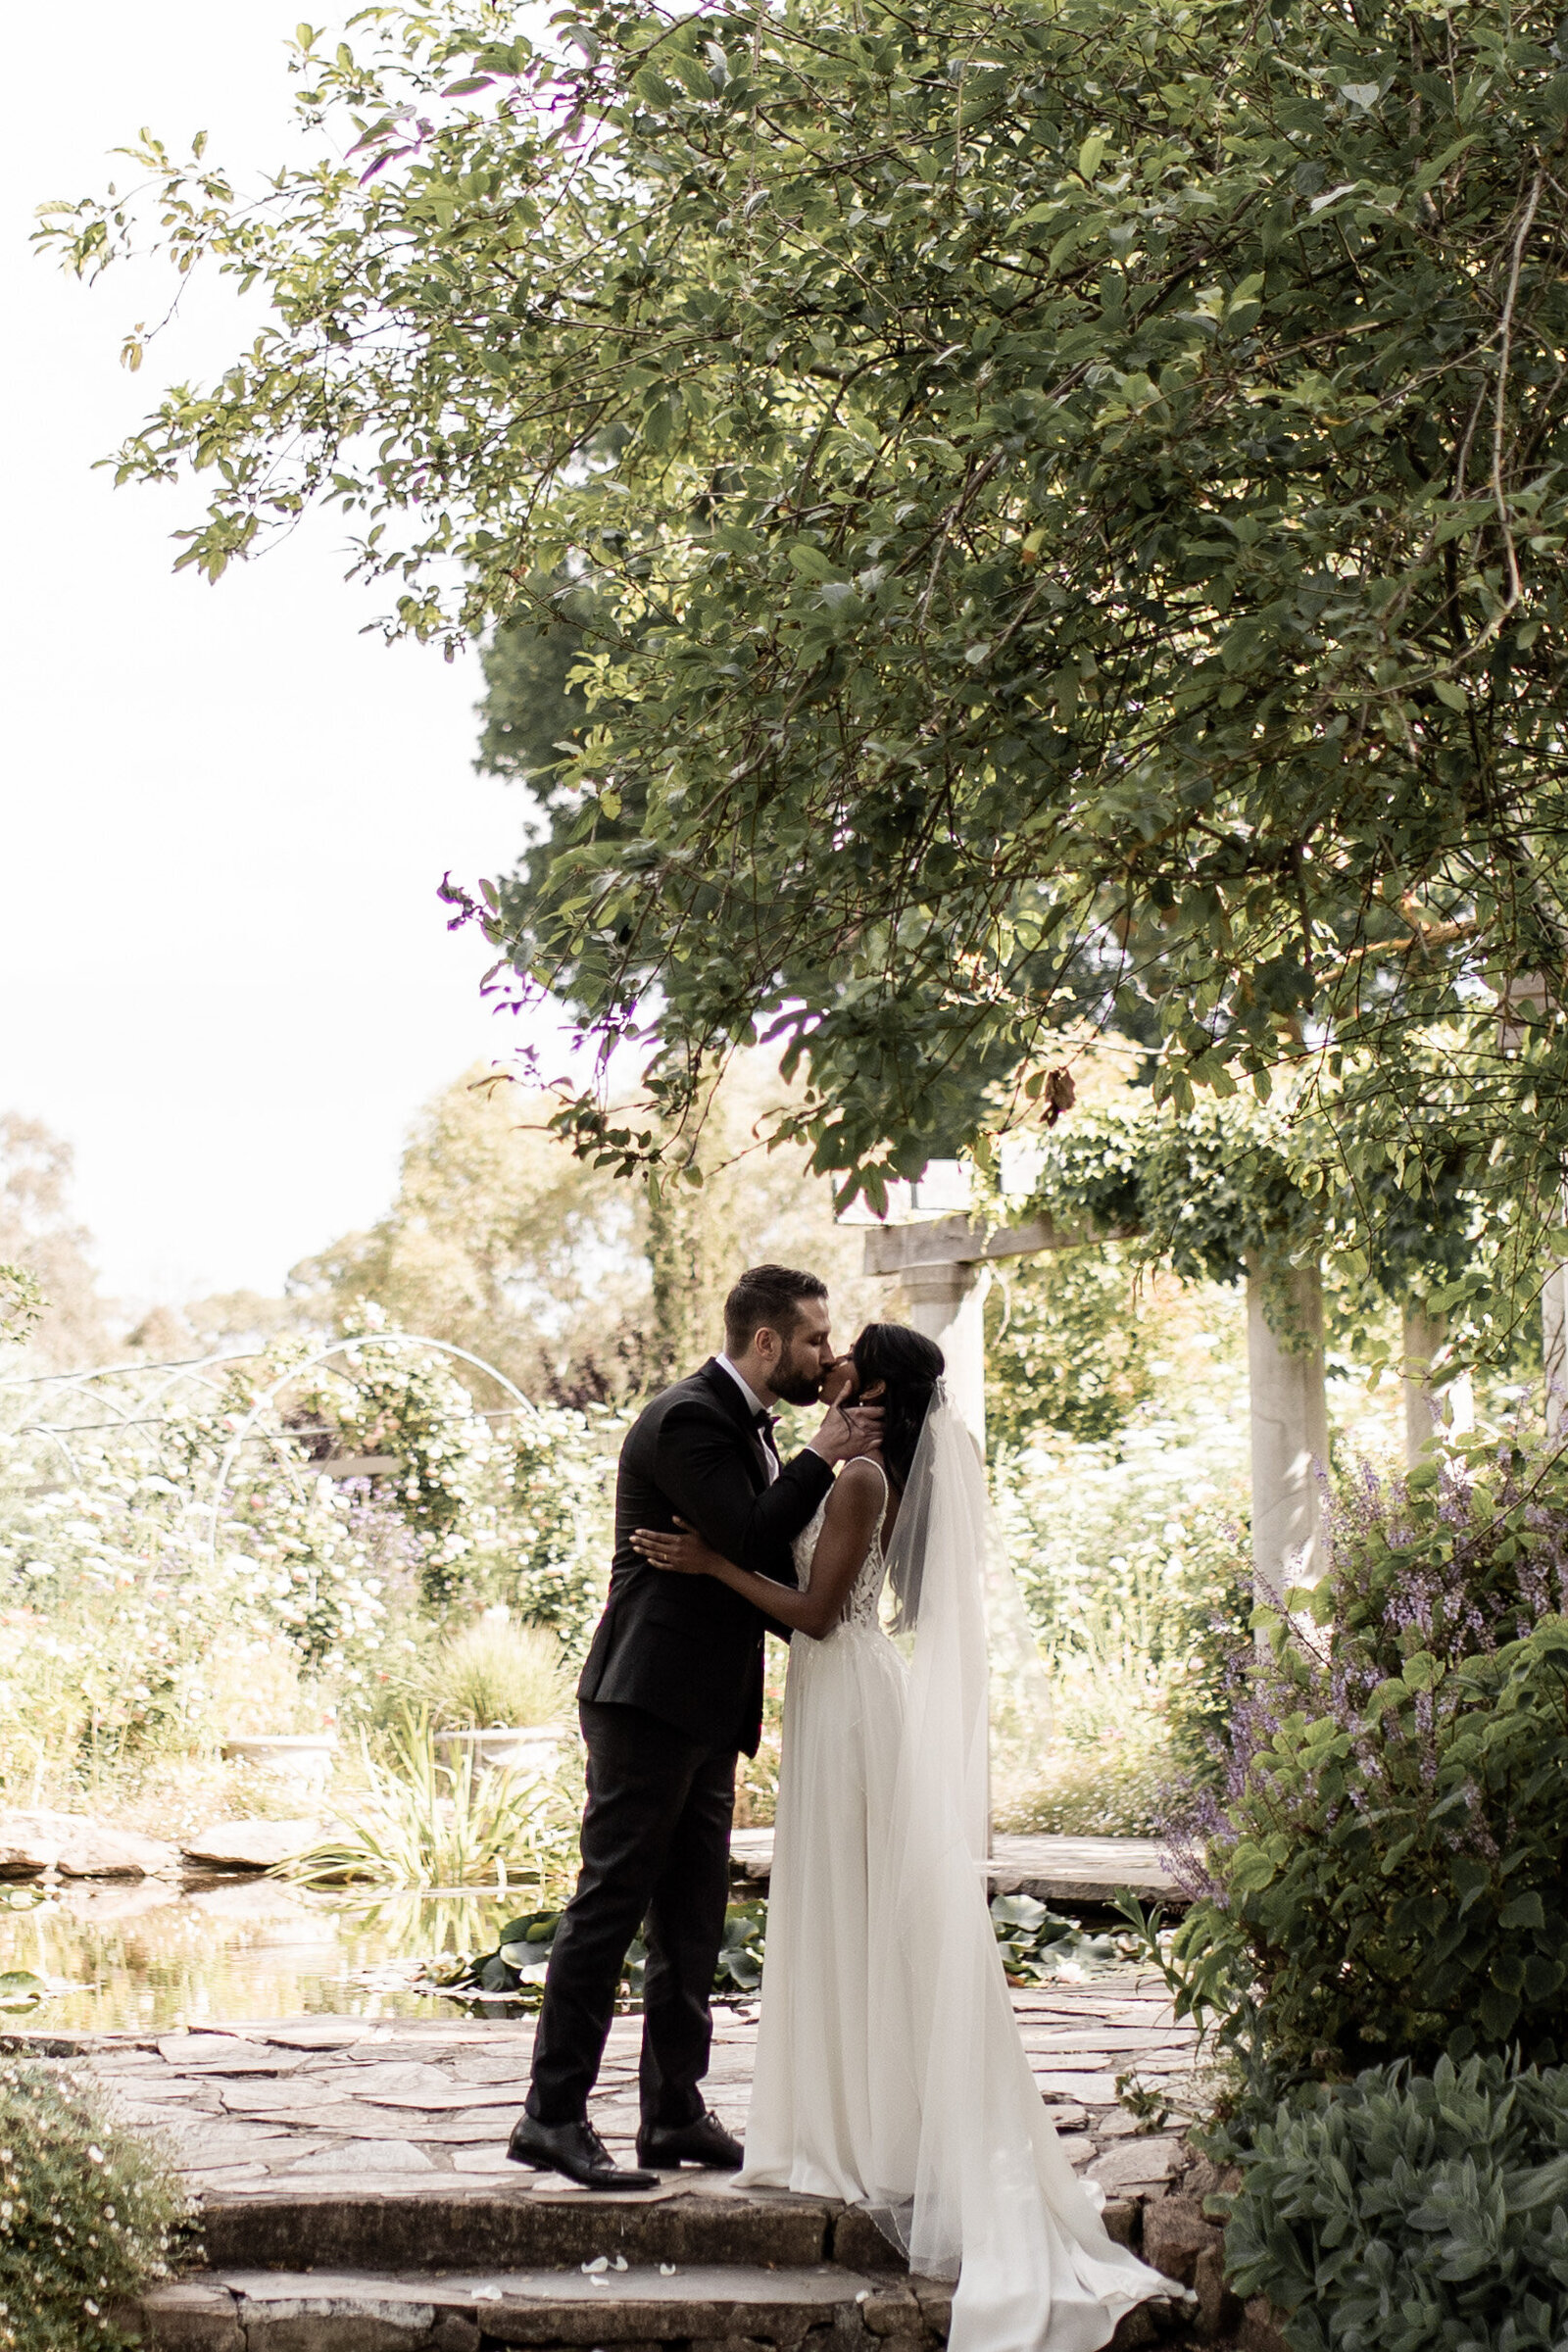 231112-Shaz-Zac-Rexvil-Photography-Adelaide-Wedding-Photographer-290